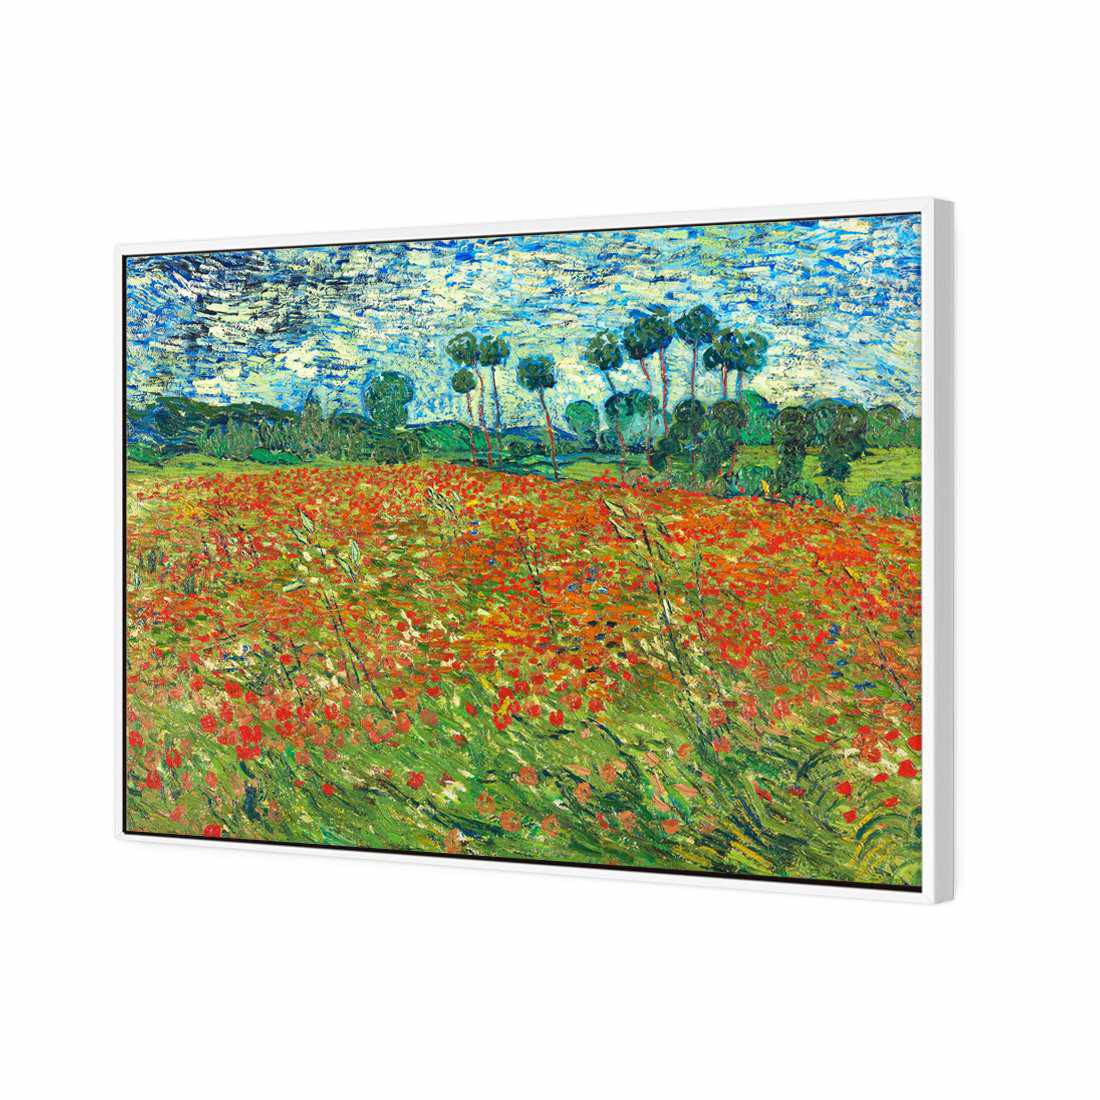 Poppy Field by Van Gogh Canvas Art-Canvas-Wall Art Designs-45x30cm-Canvas - White Frame-Wall Art Designs